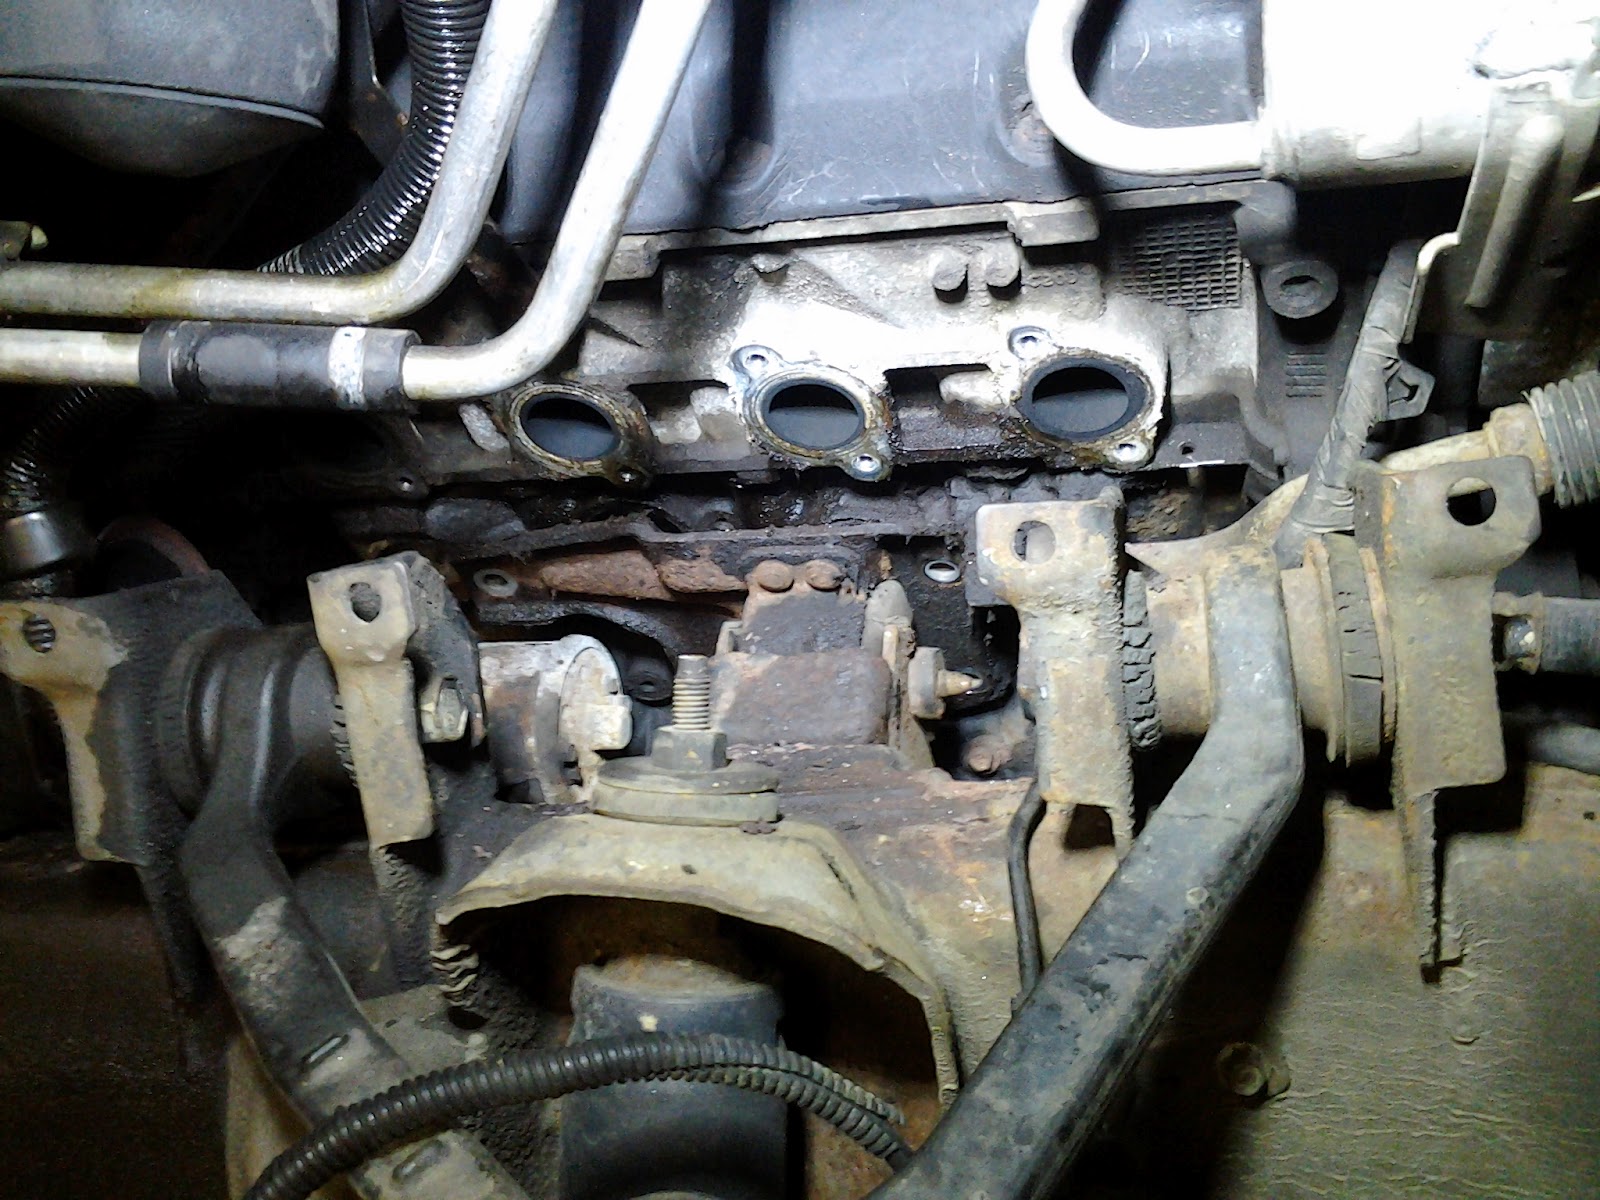 2003 Ford f150 exhaust manifold leak #1